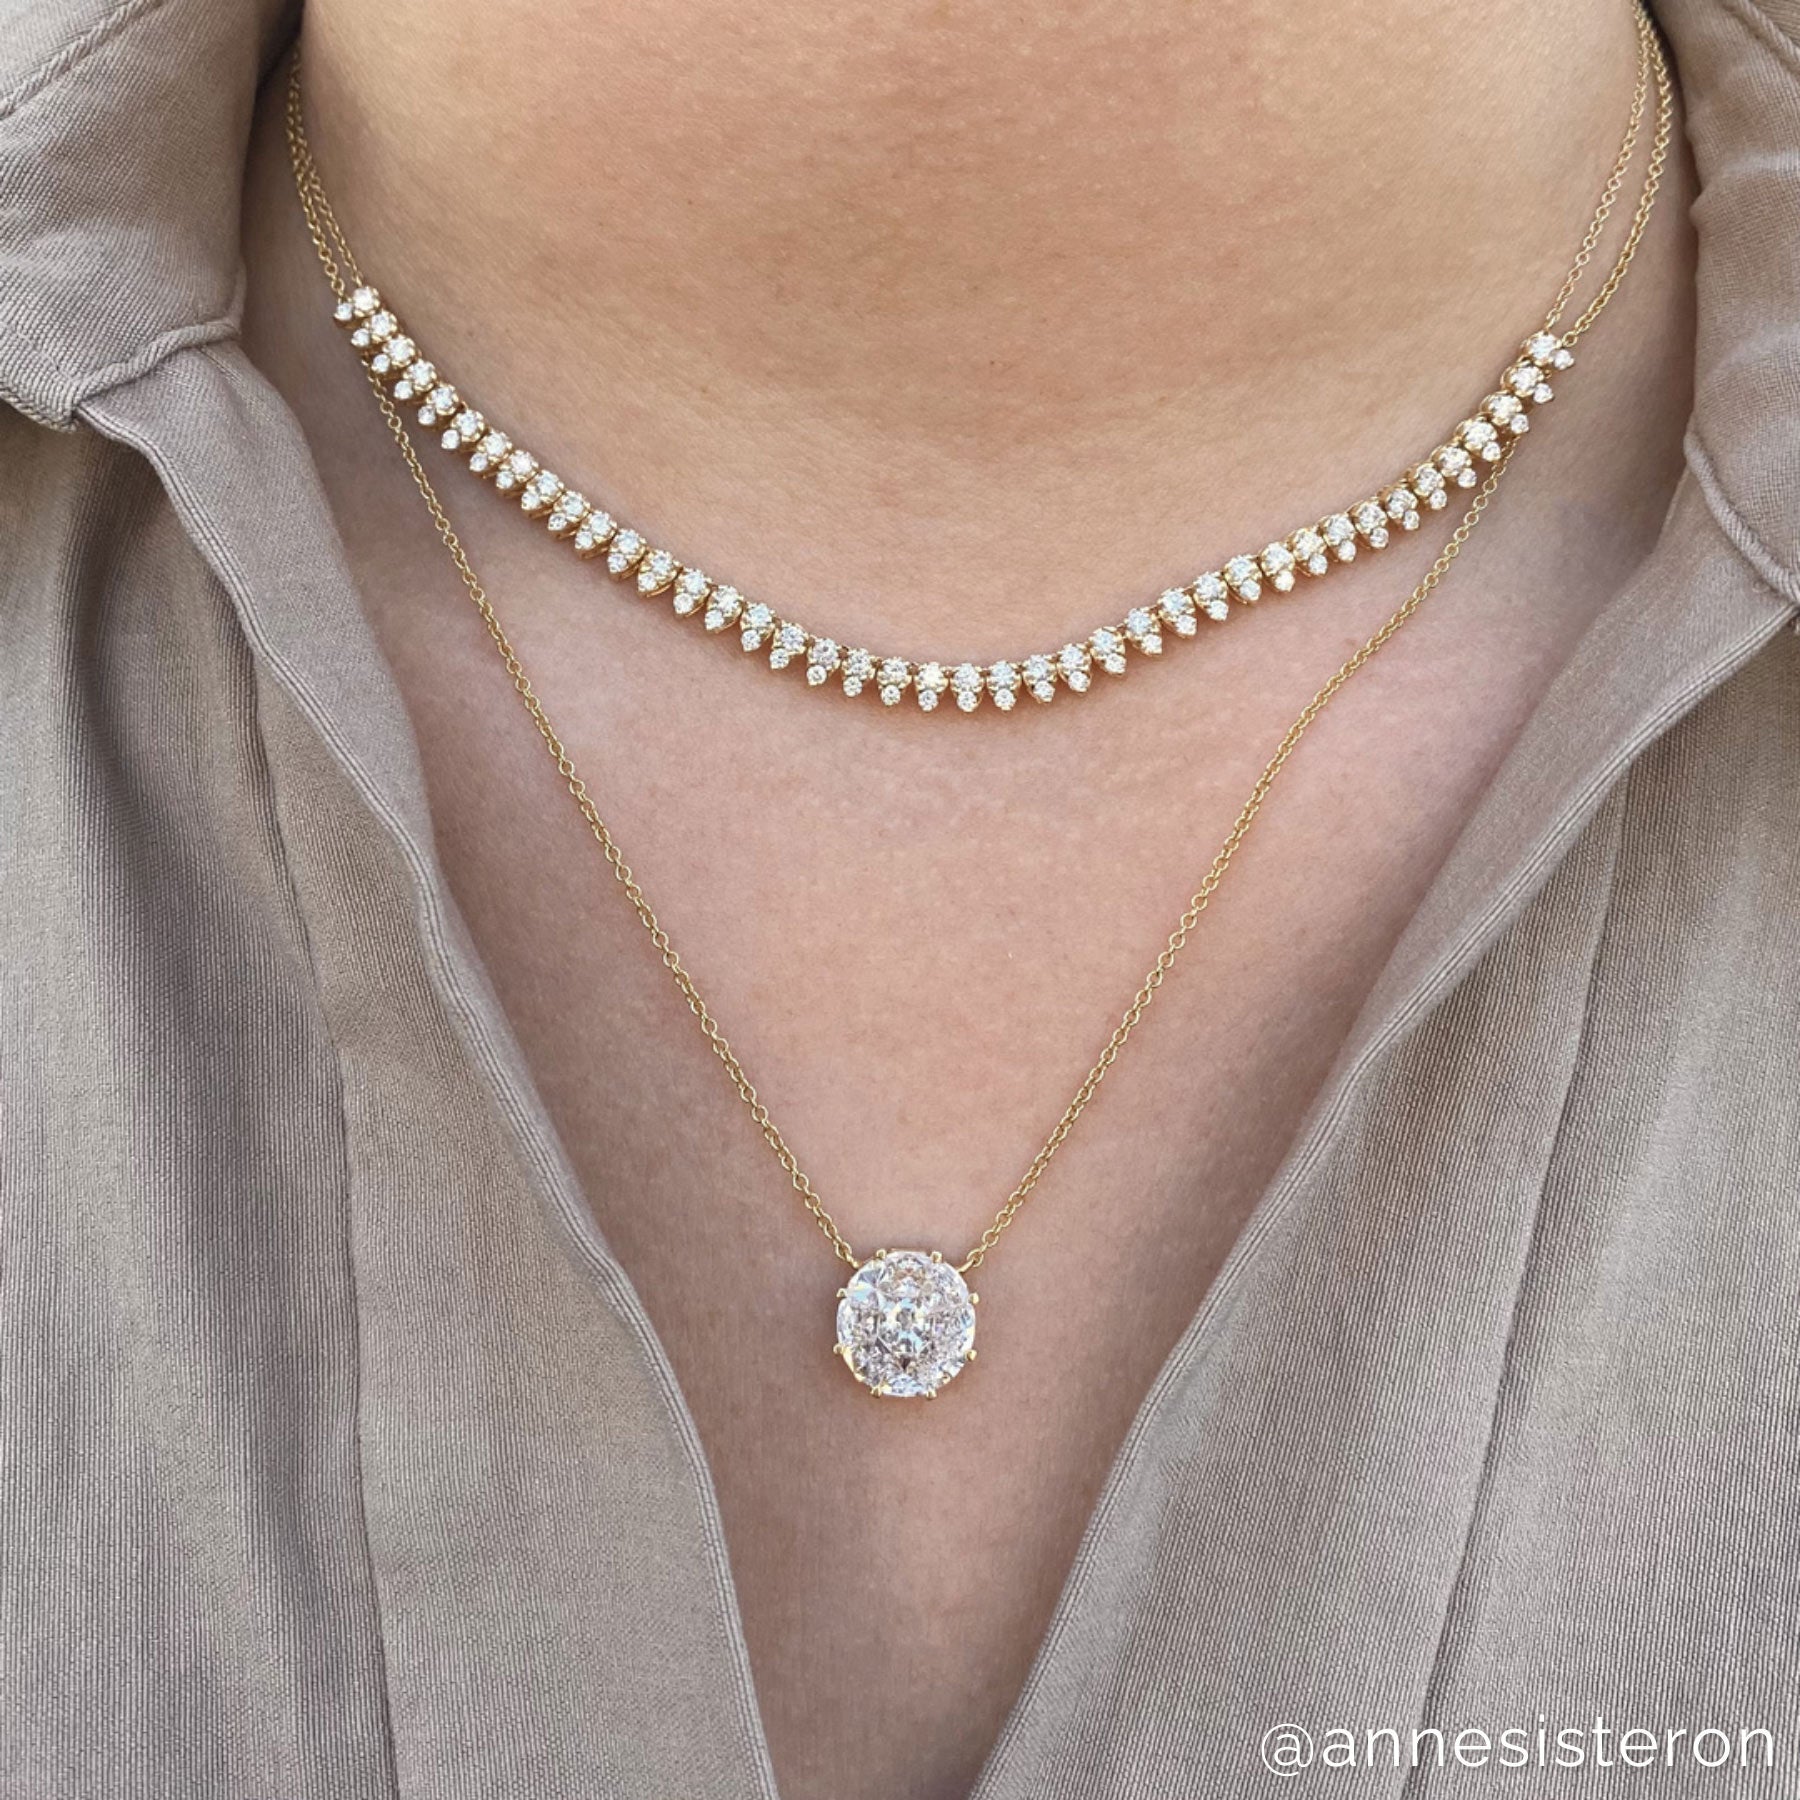 14KT White Gold Diamond Bridgette Necklace